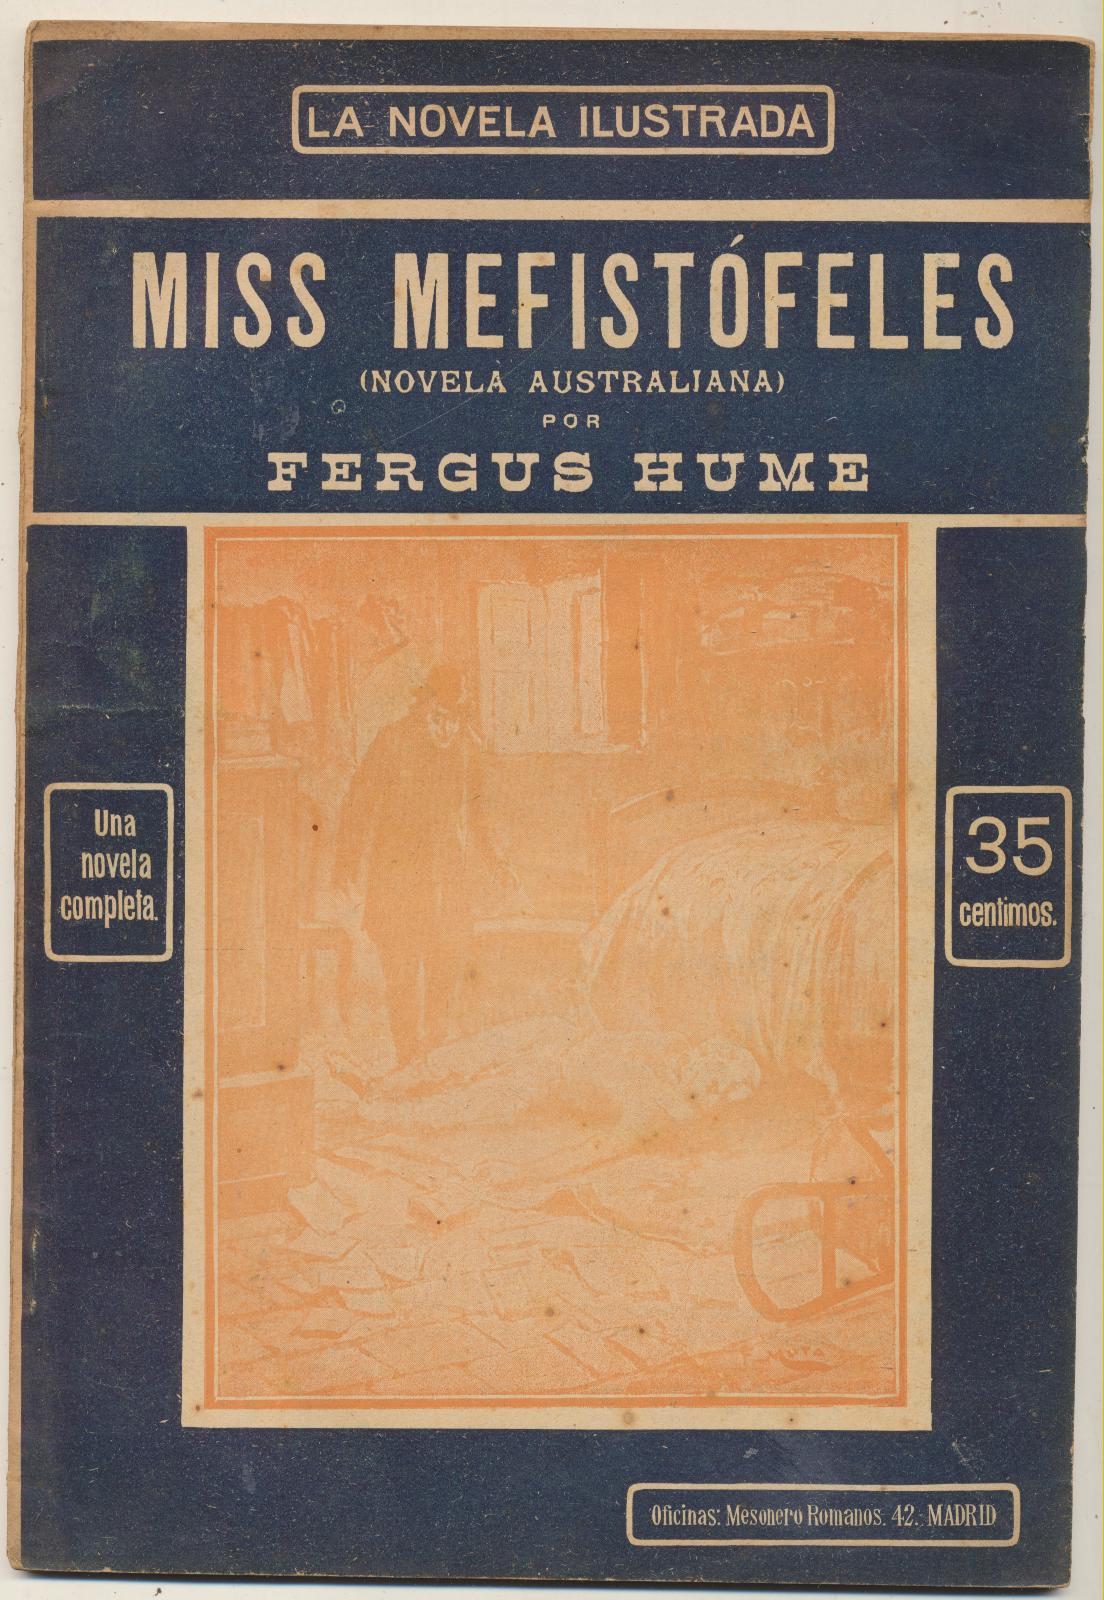 La Novela Ilustrada nº 1. Miss Mefistófeles por Fergus Hume. 190?